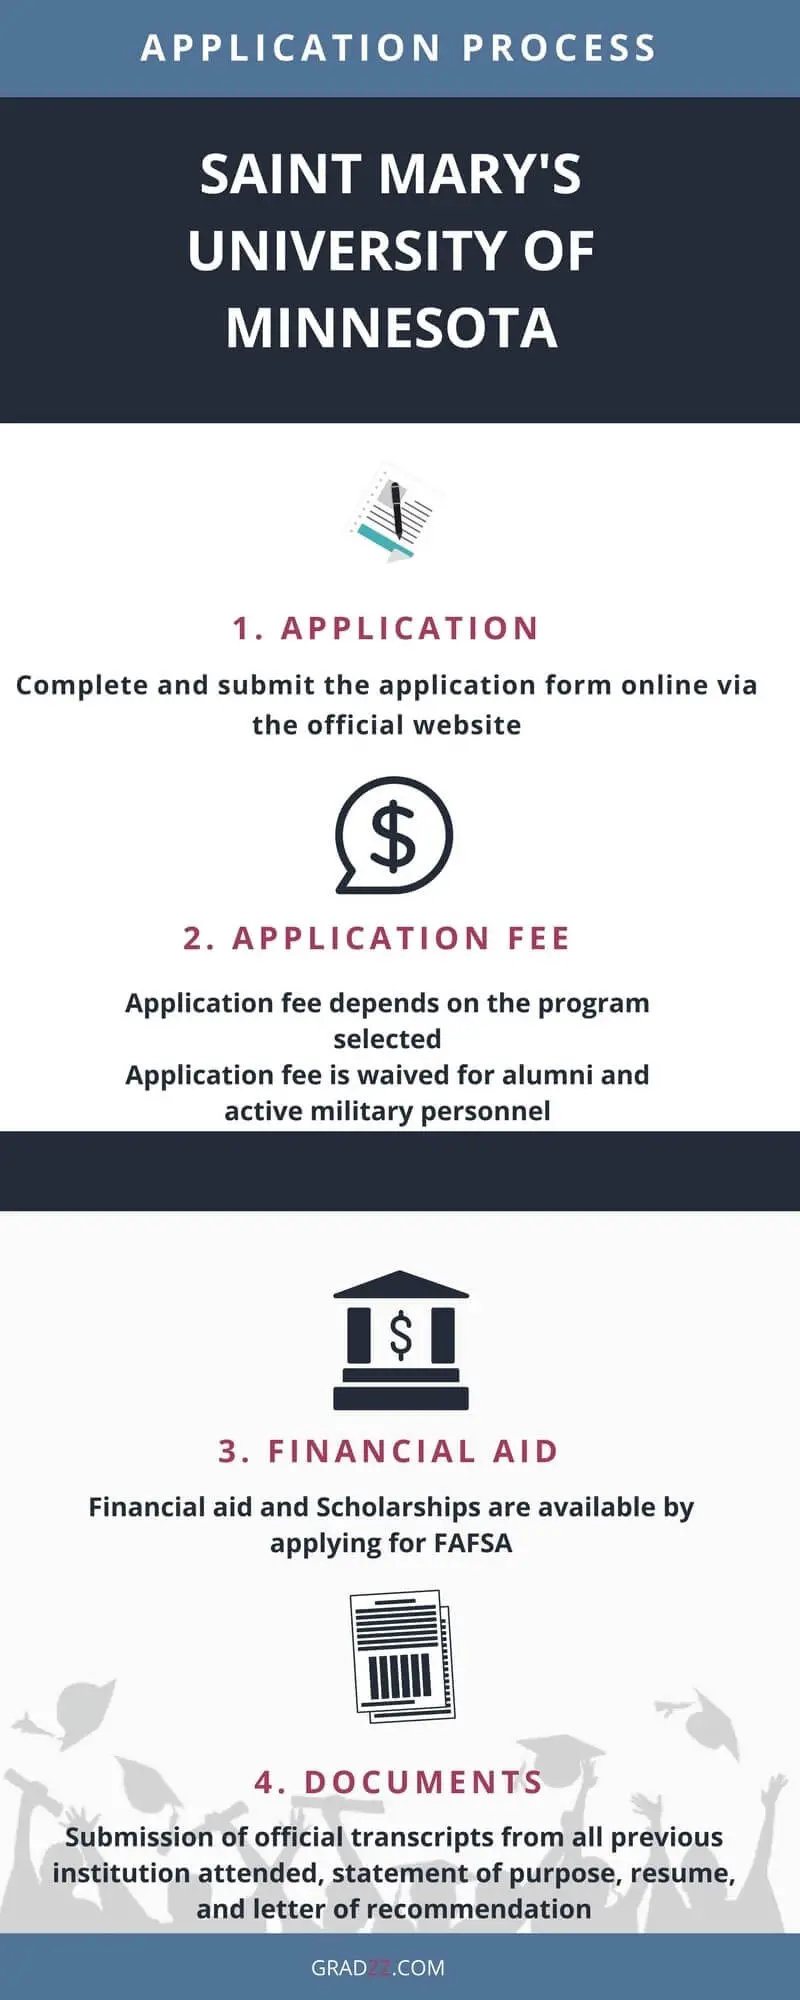 Saint Mary's University of Minnesota Admission Process